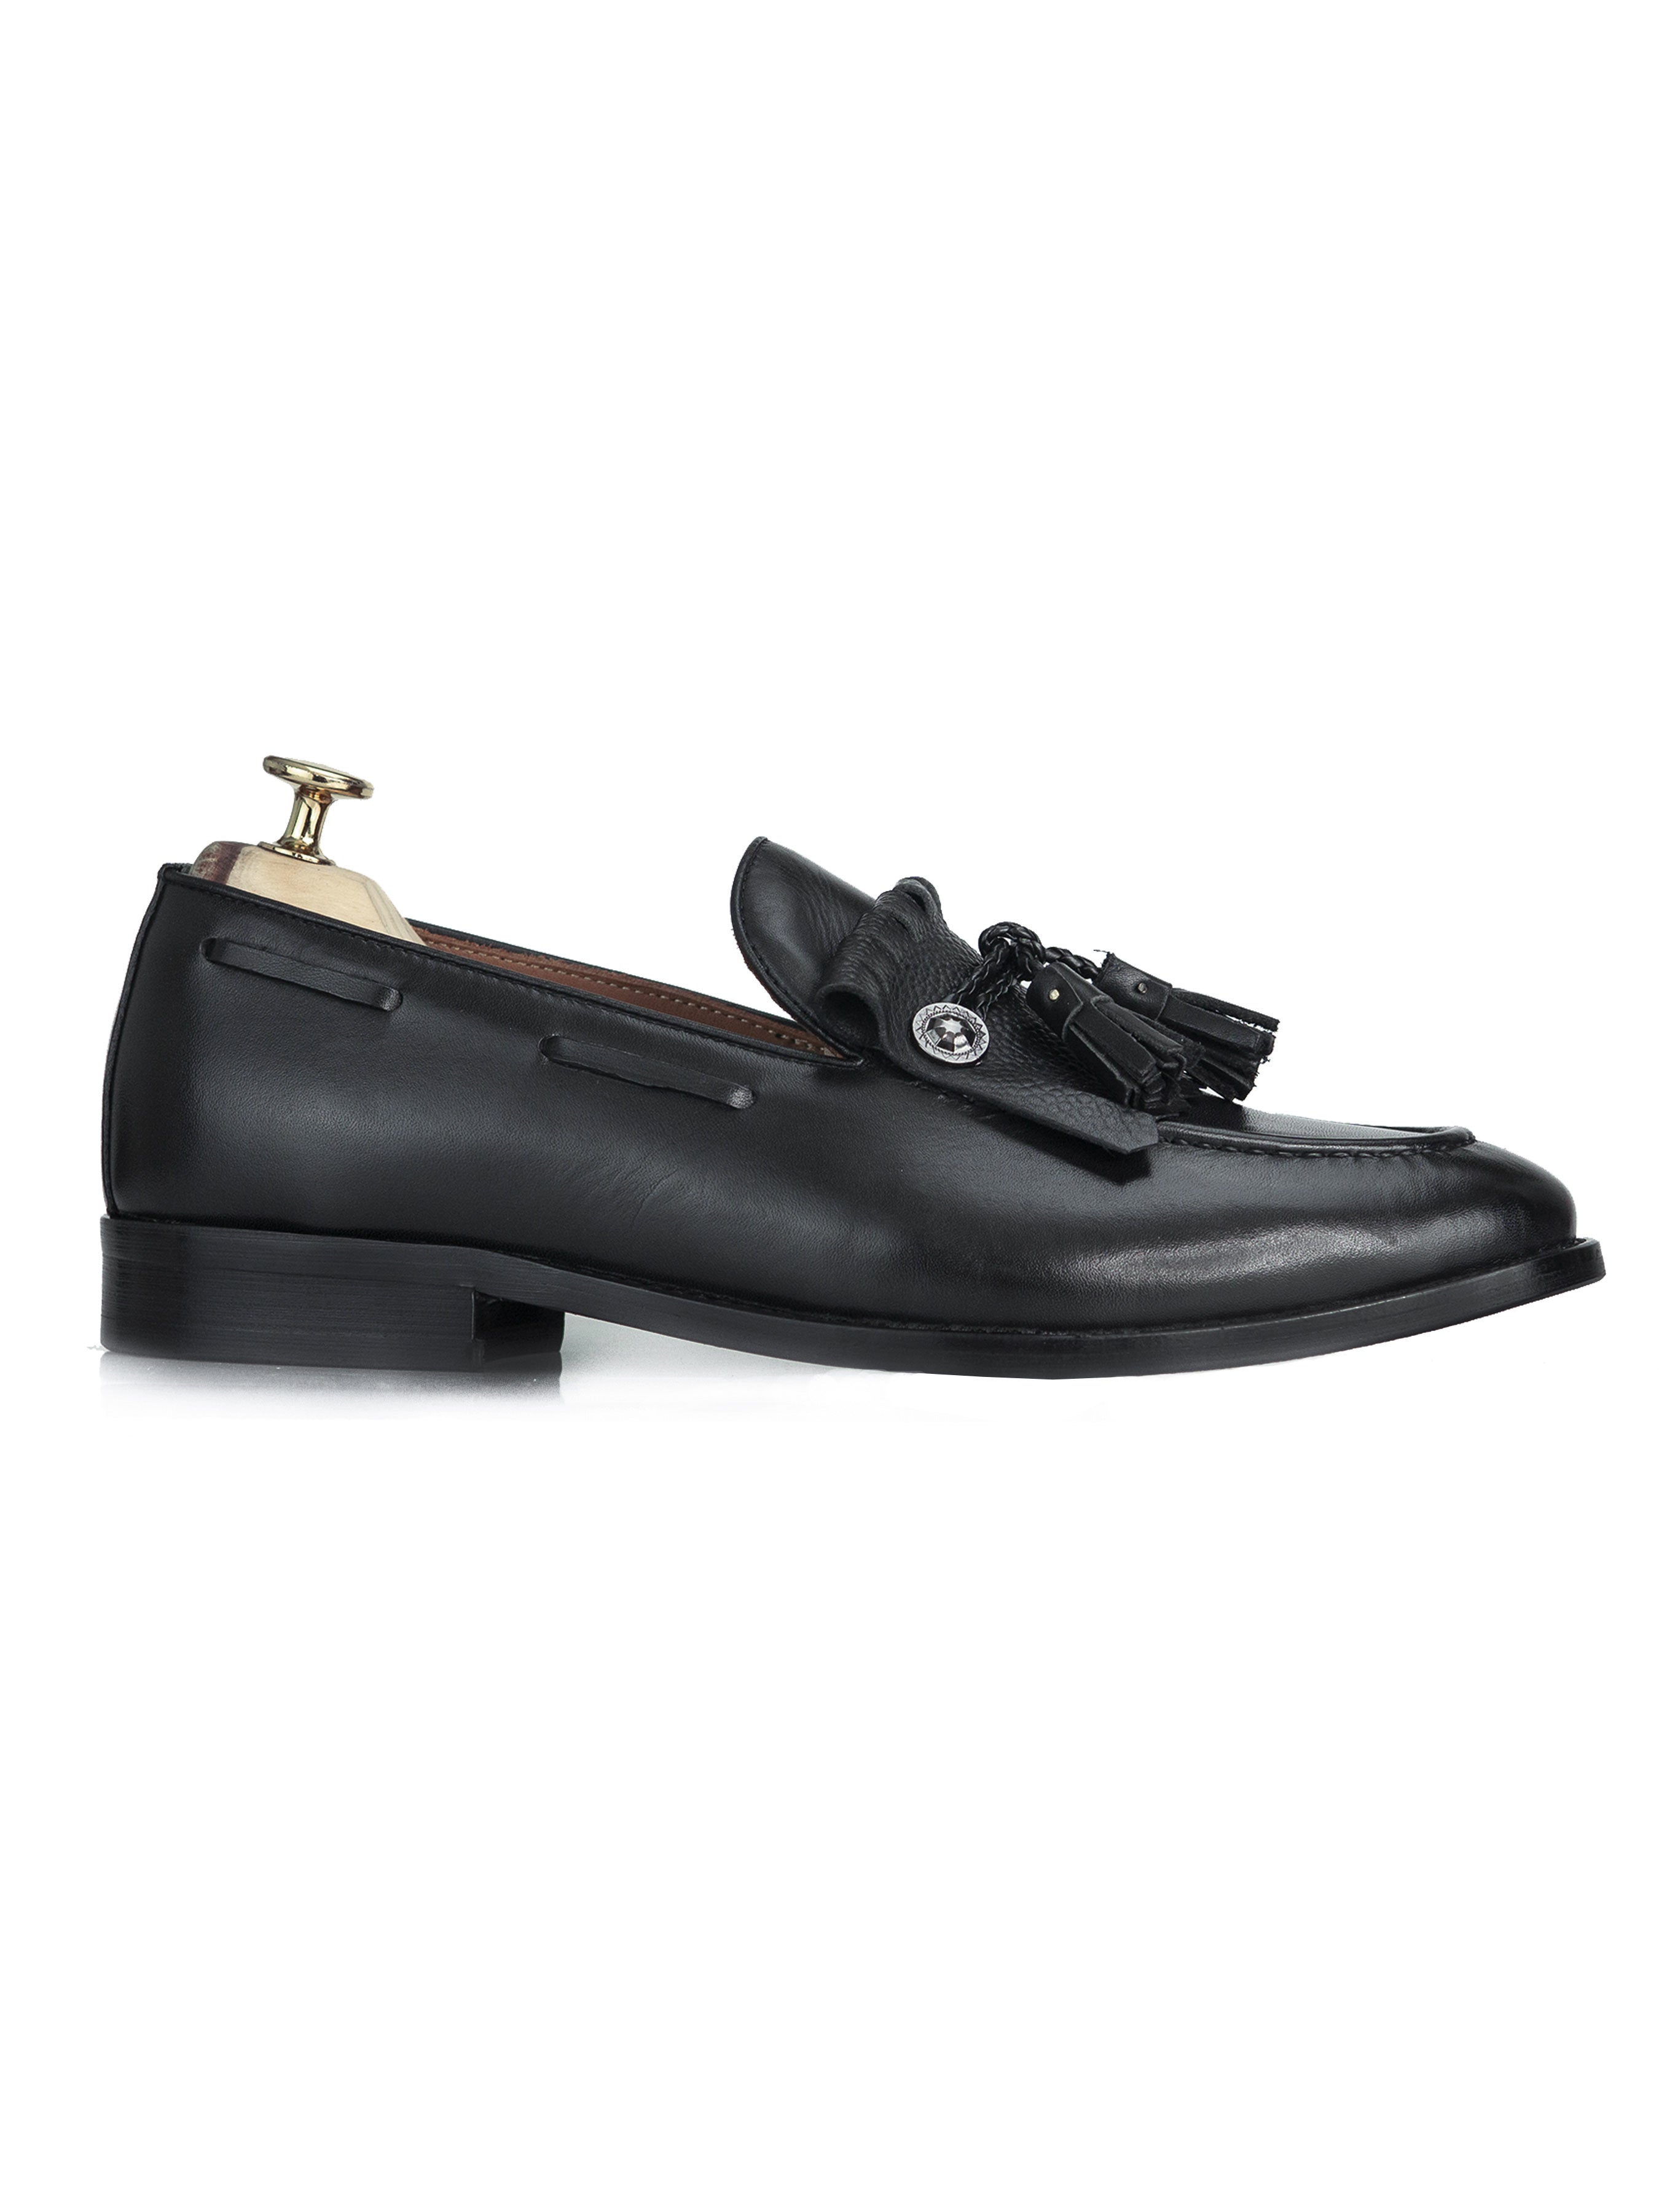 Fringe Ribbon Loafer - Black with Tassel (Hand Painted Patina) - Zeve Shoes